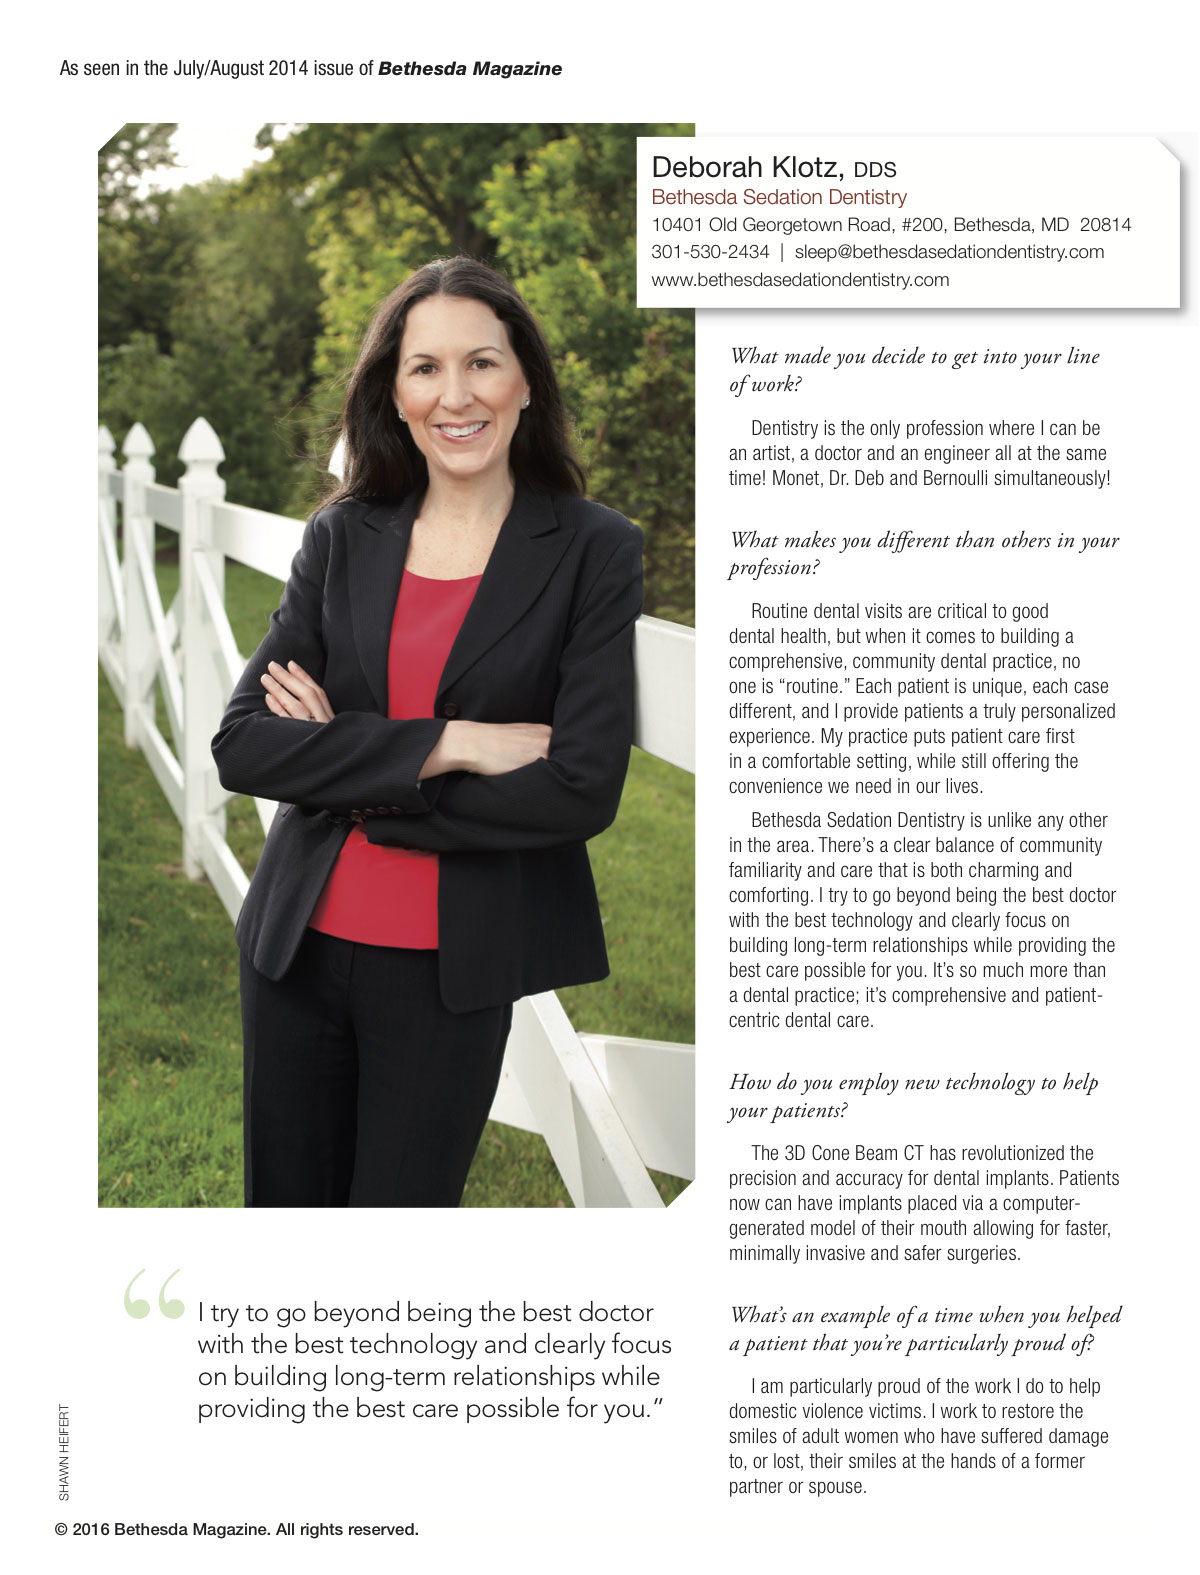 Interview with Deborah Klotz, DDS for July/August 2014 issue of Bethesda Magazine